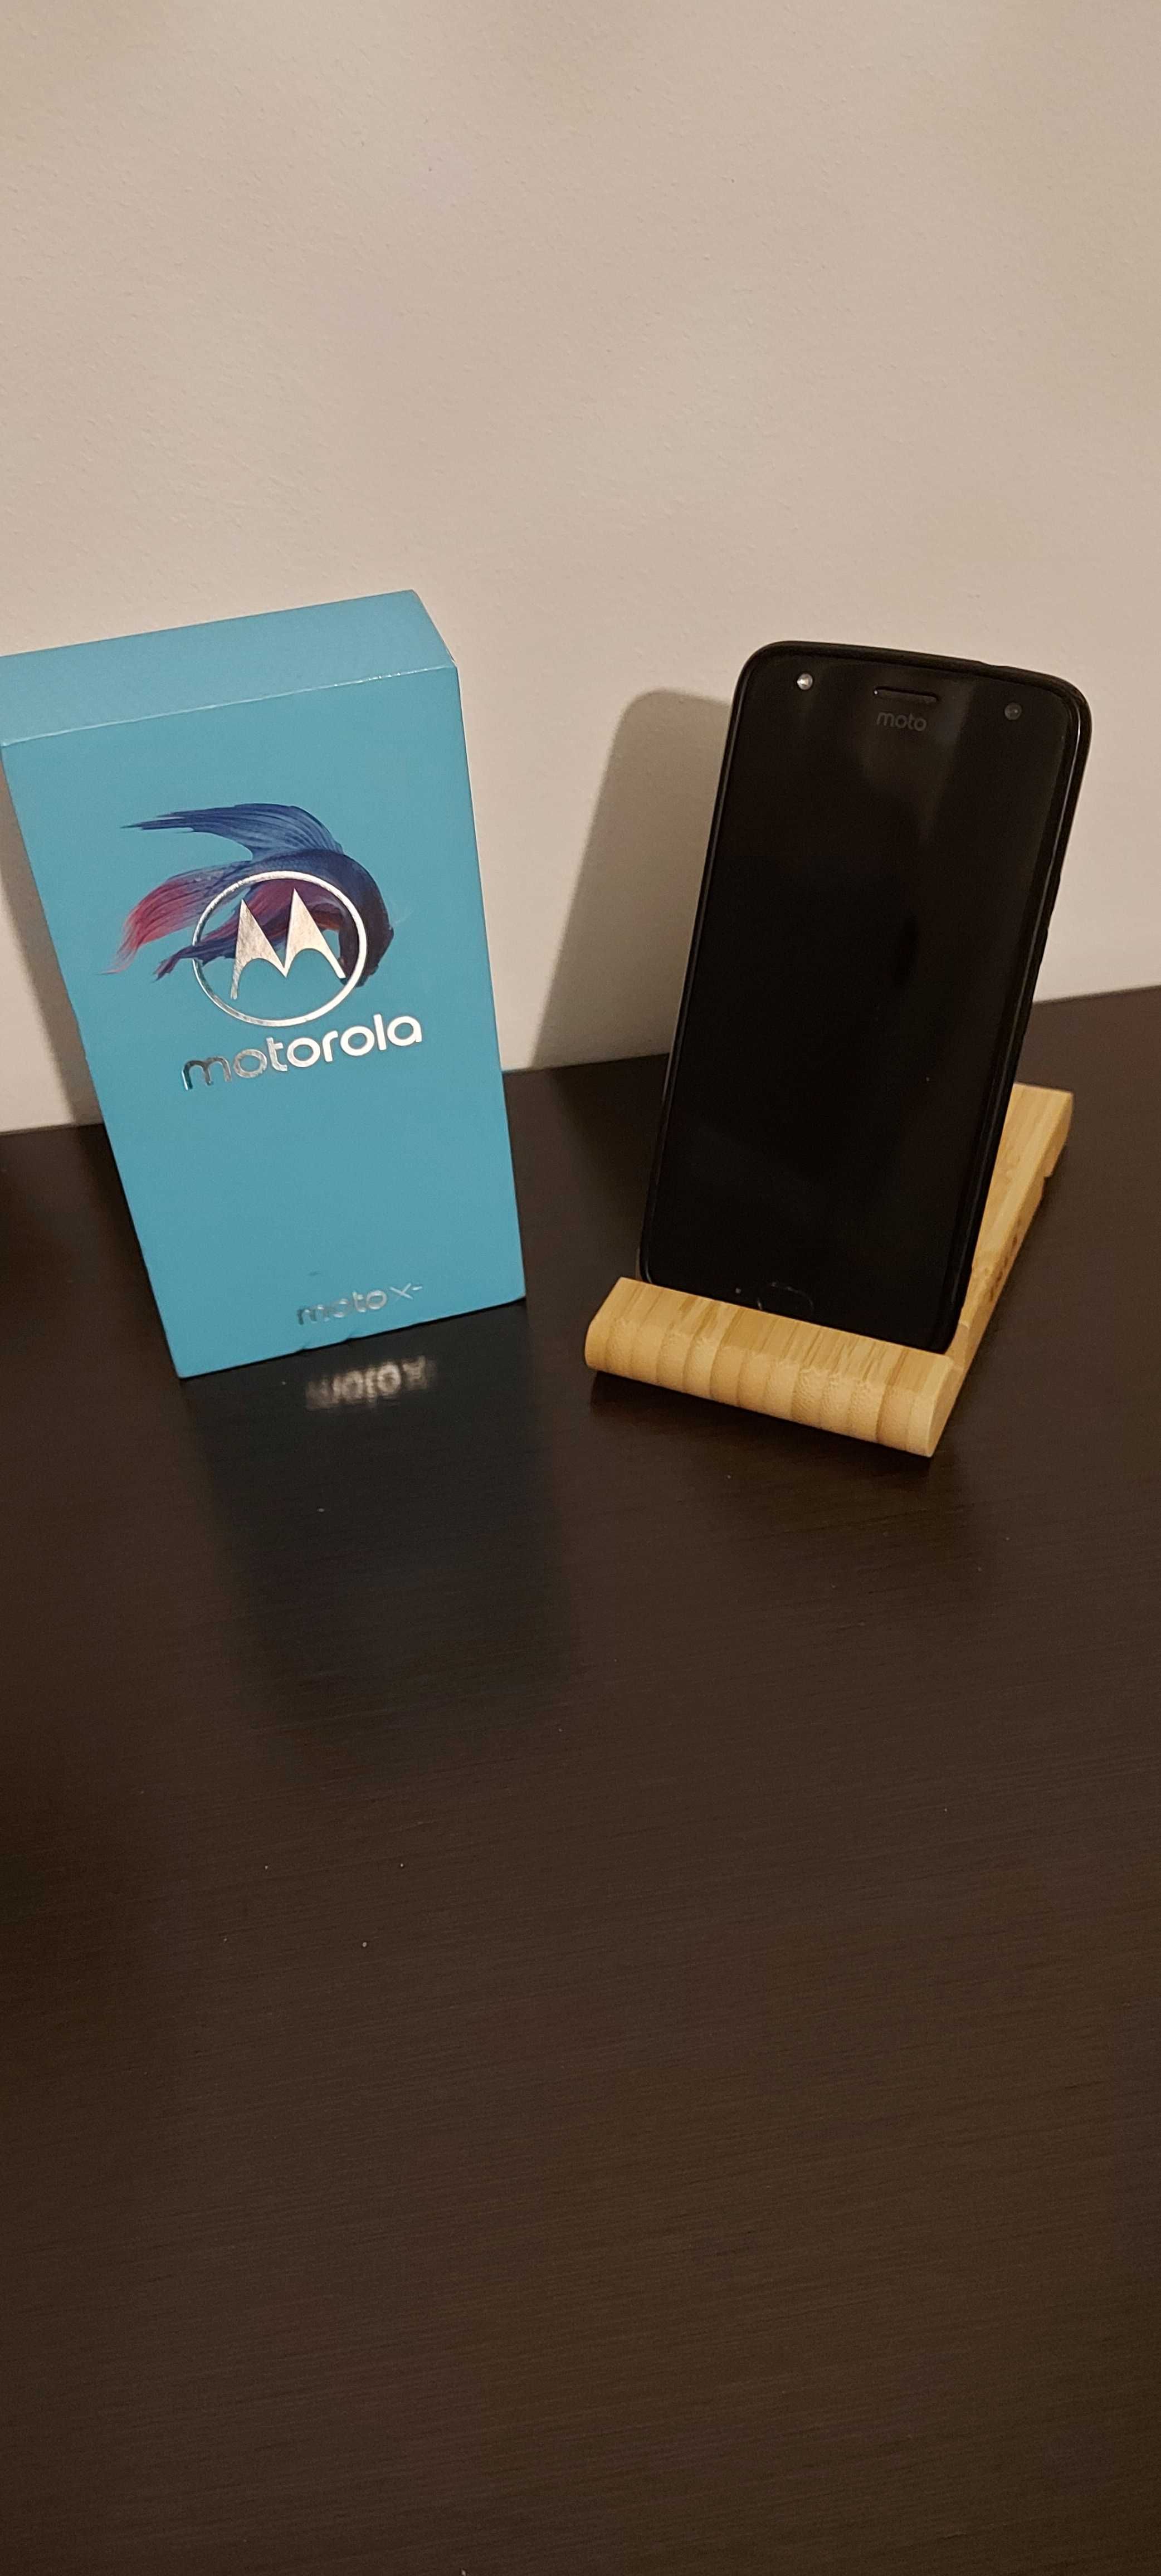 Motorola X4, Transport Gratuit